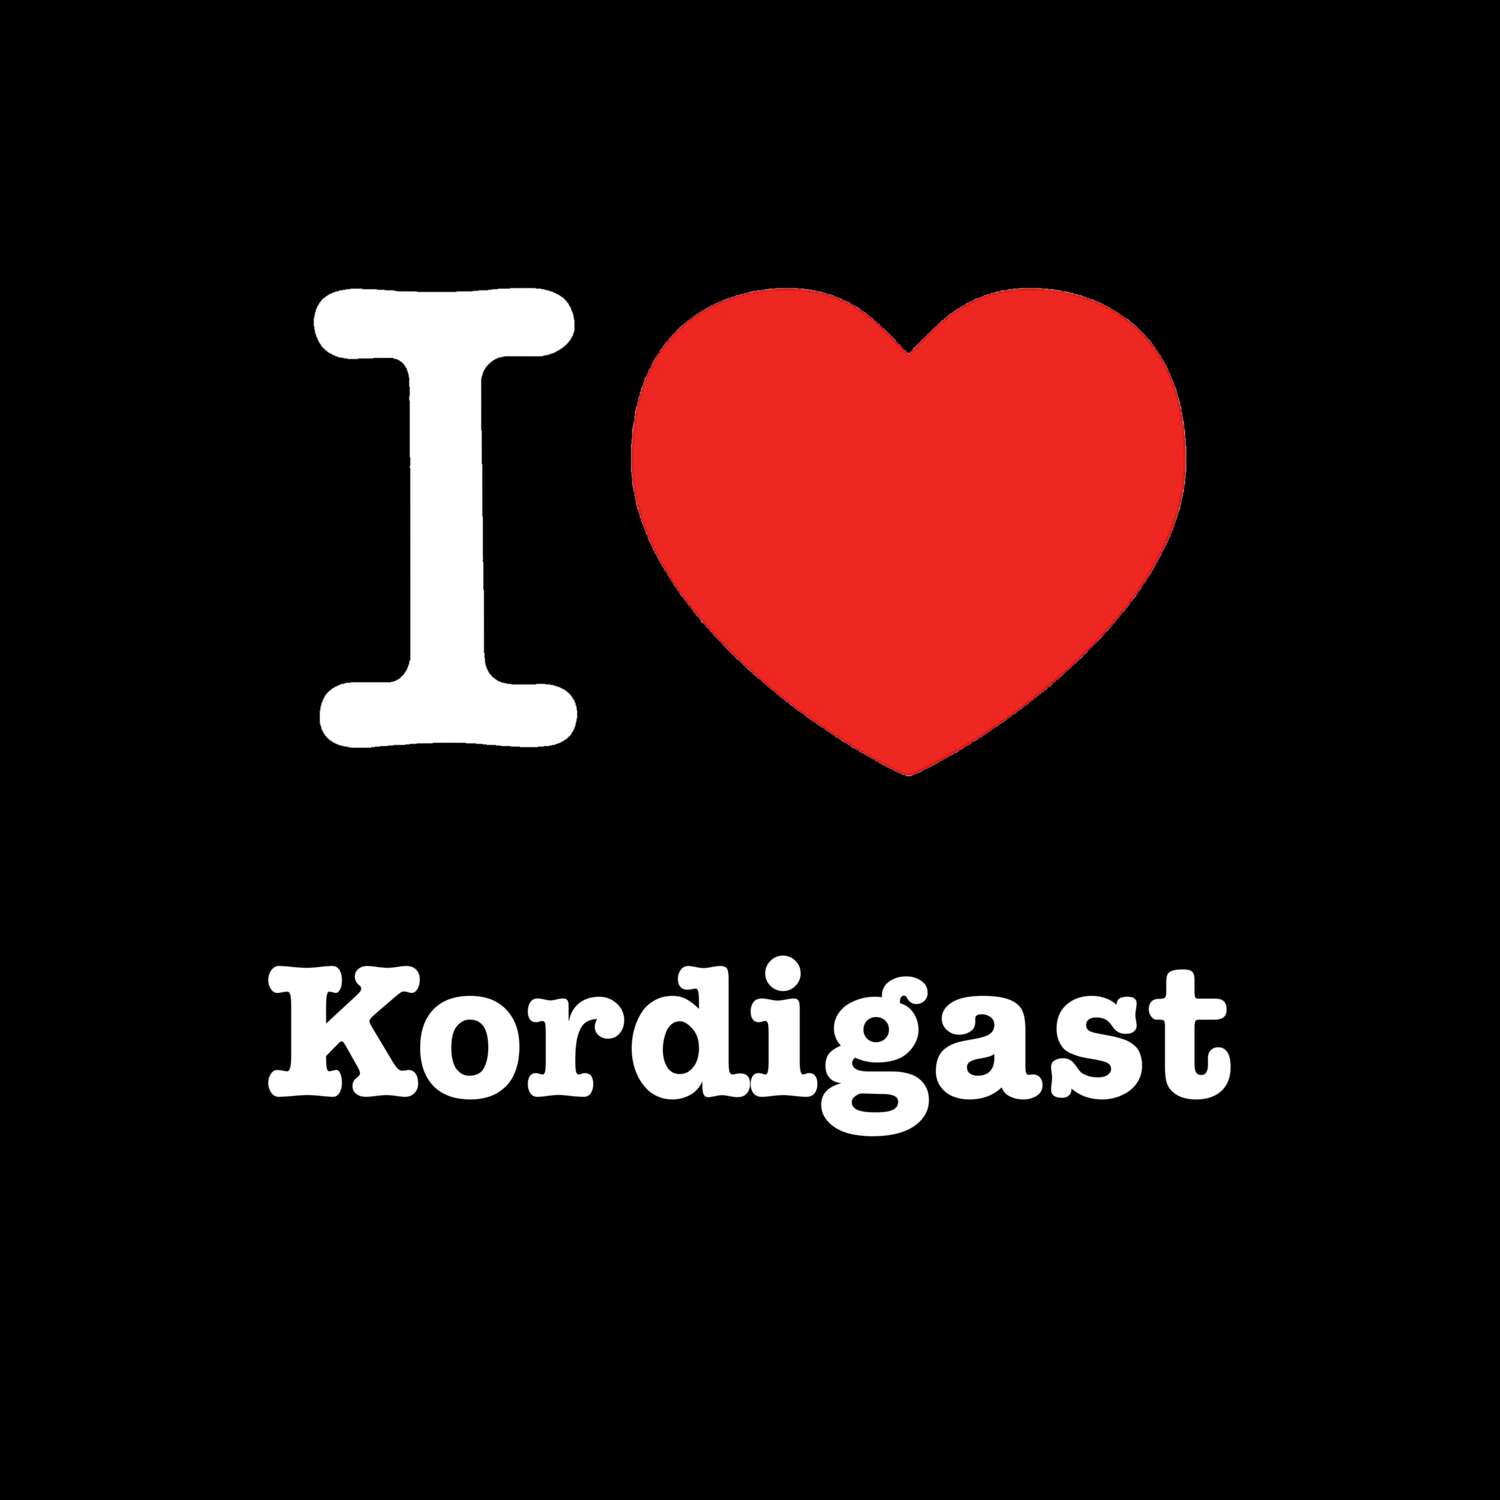 Kordigast T-Shirt »I love«